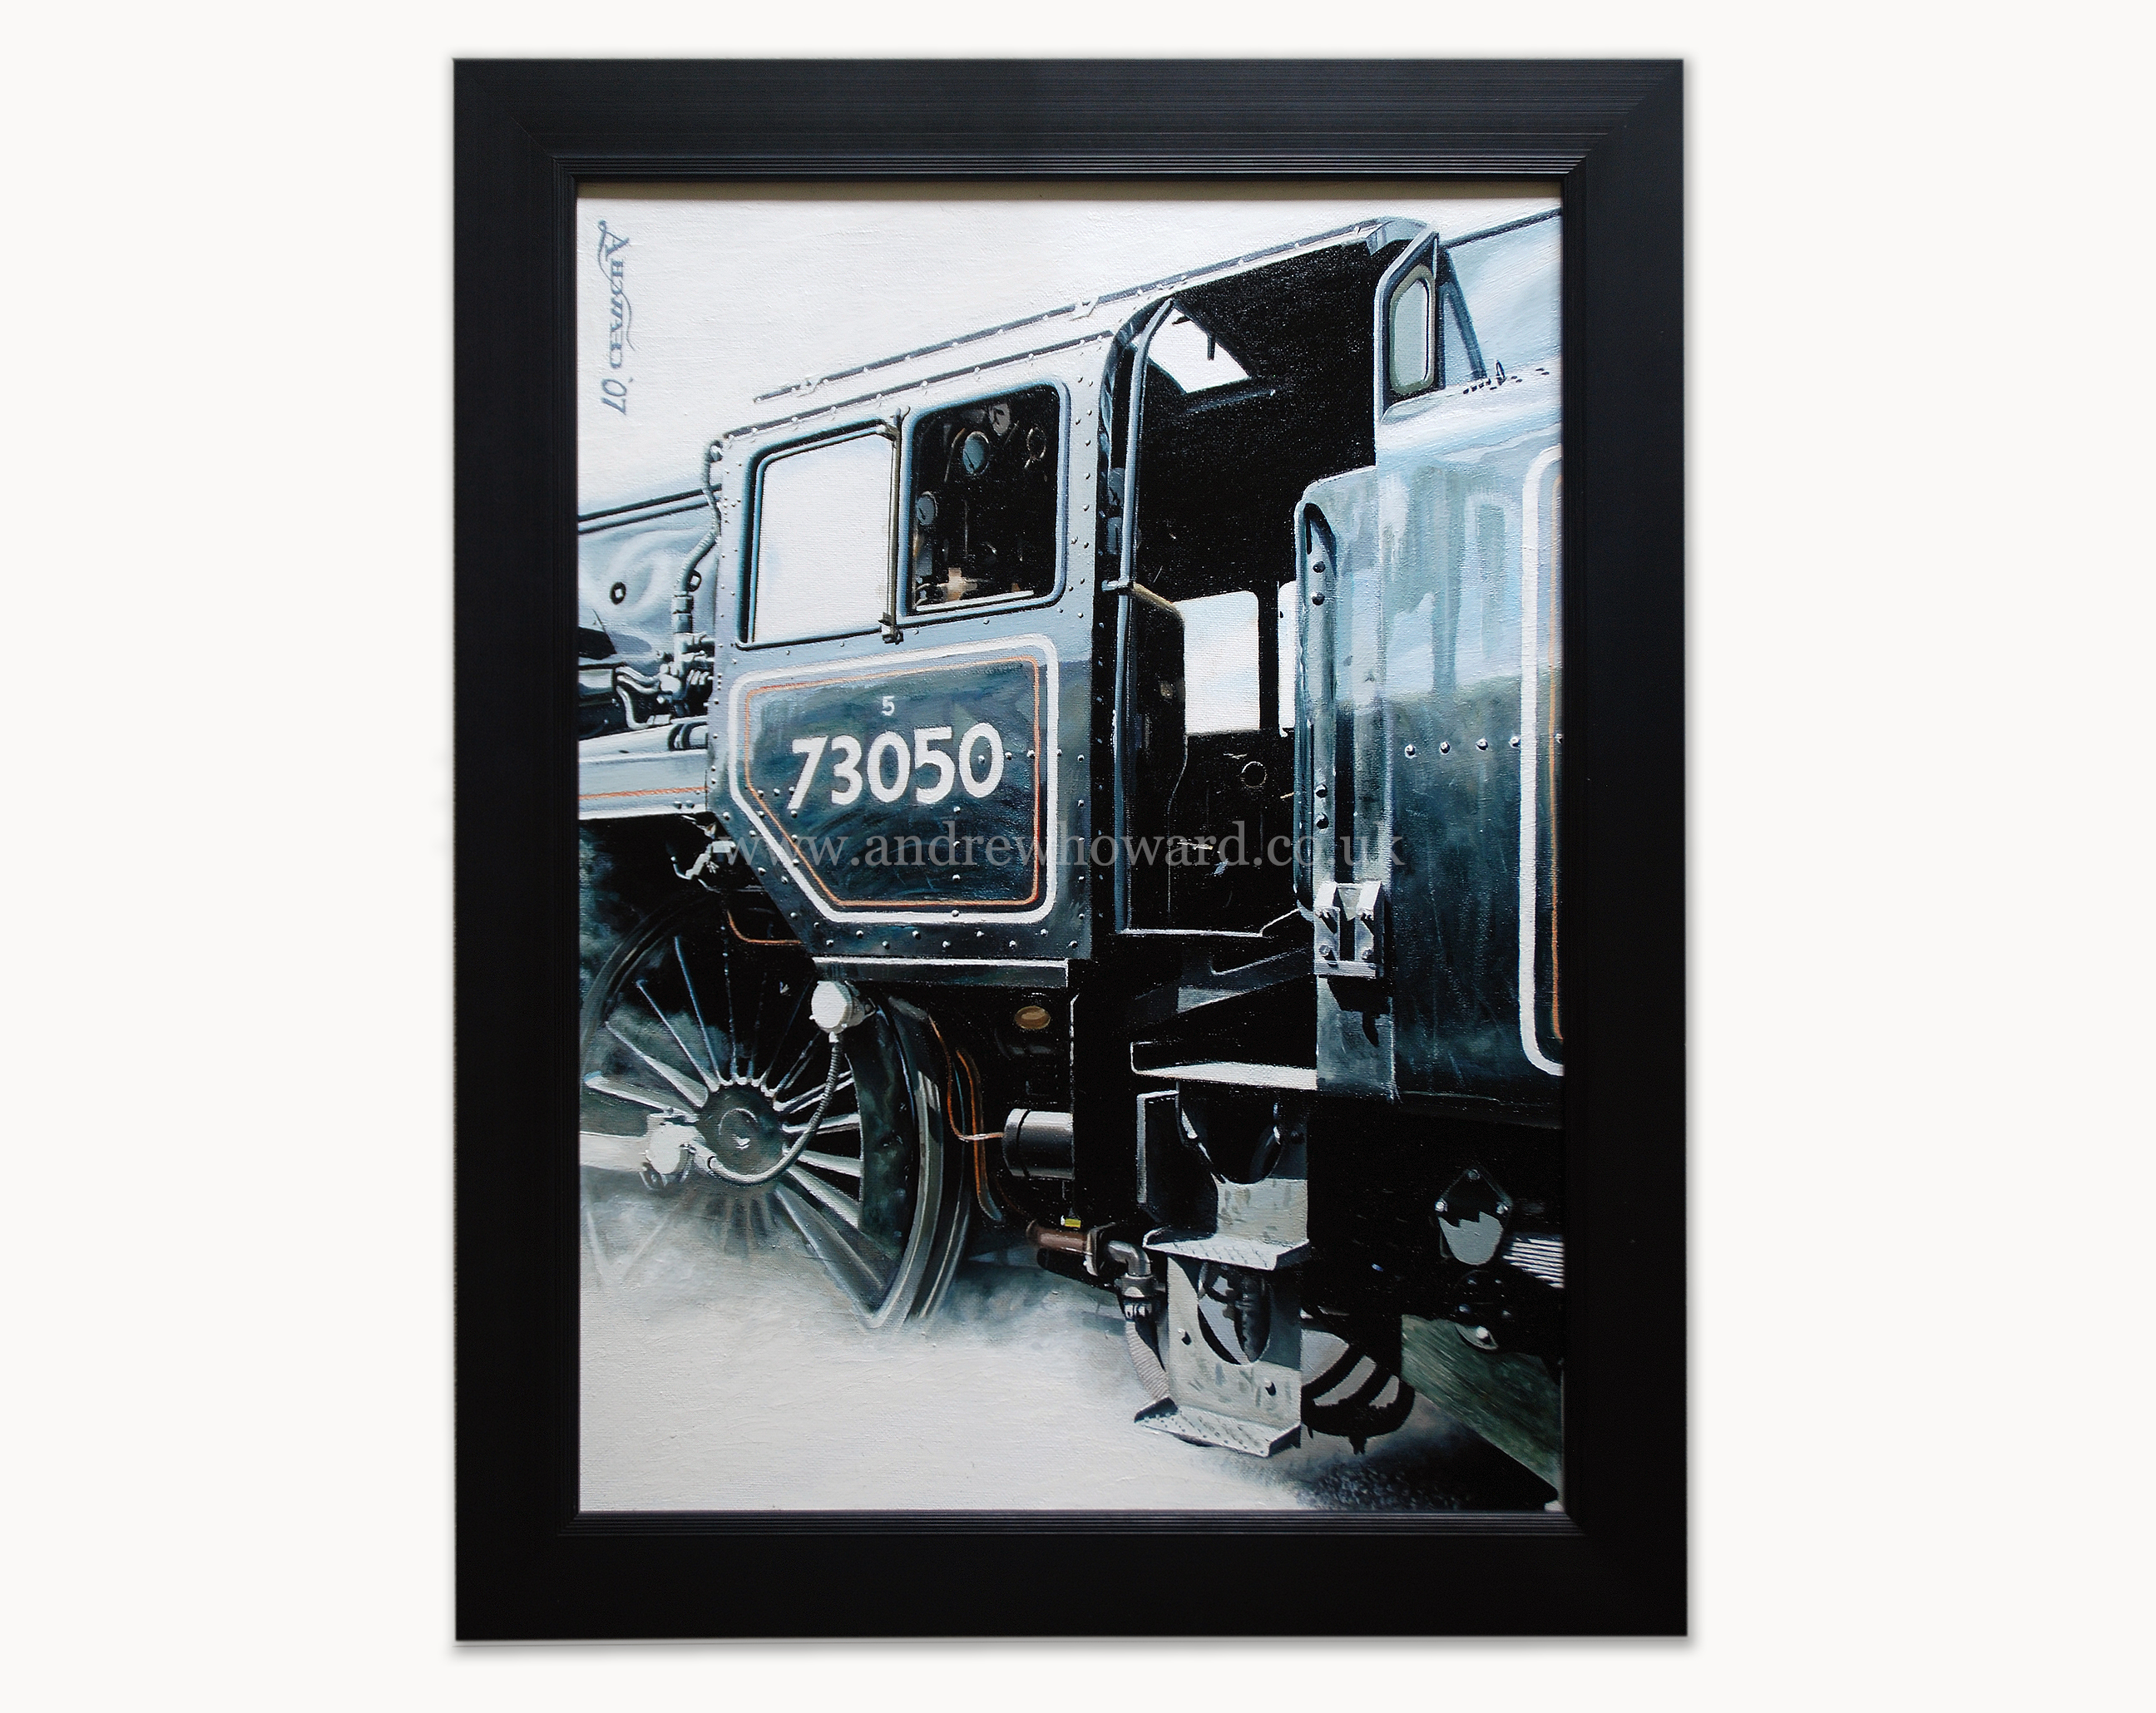 Andrew Howard Art - Cit of Peterborough steam locomotive oil painting